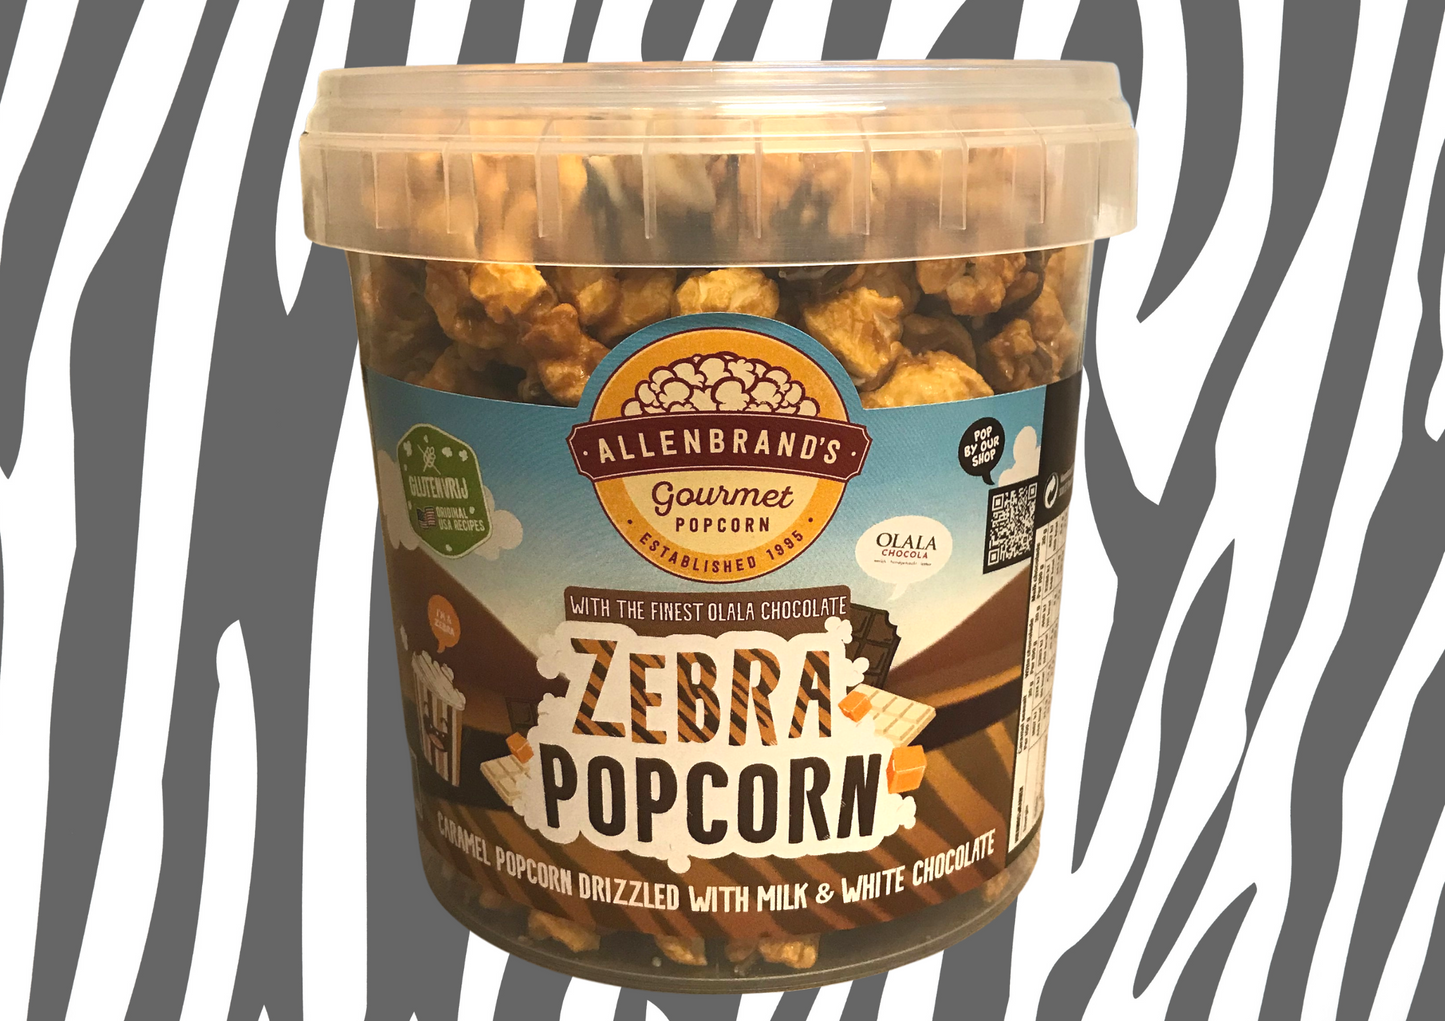 Zebra Popcorn: Caramel Sea Salt coated in milk and white Chocolate